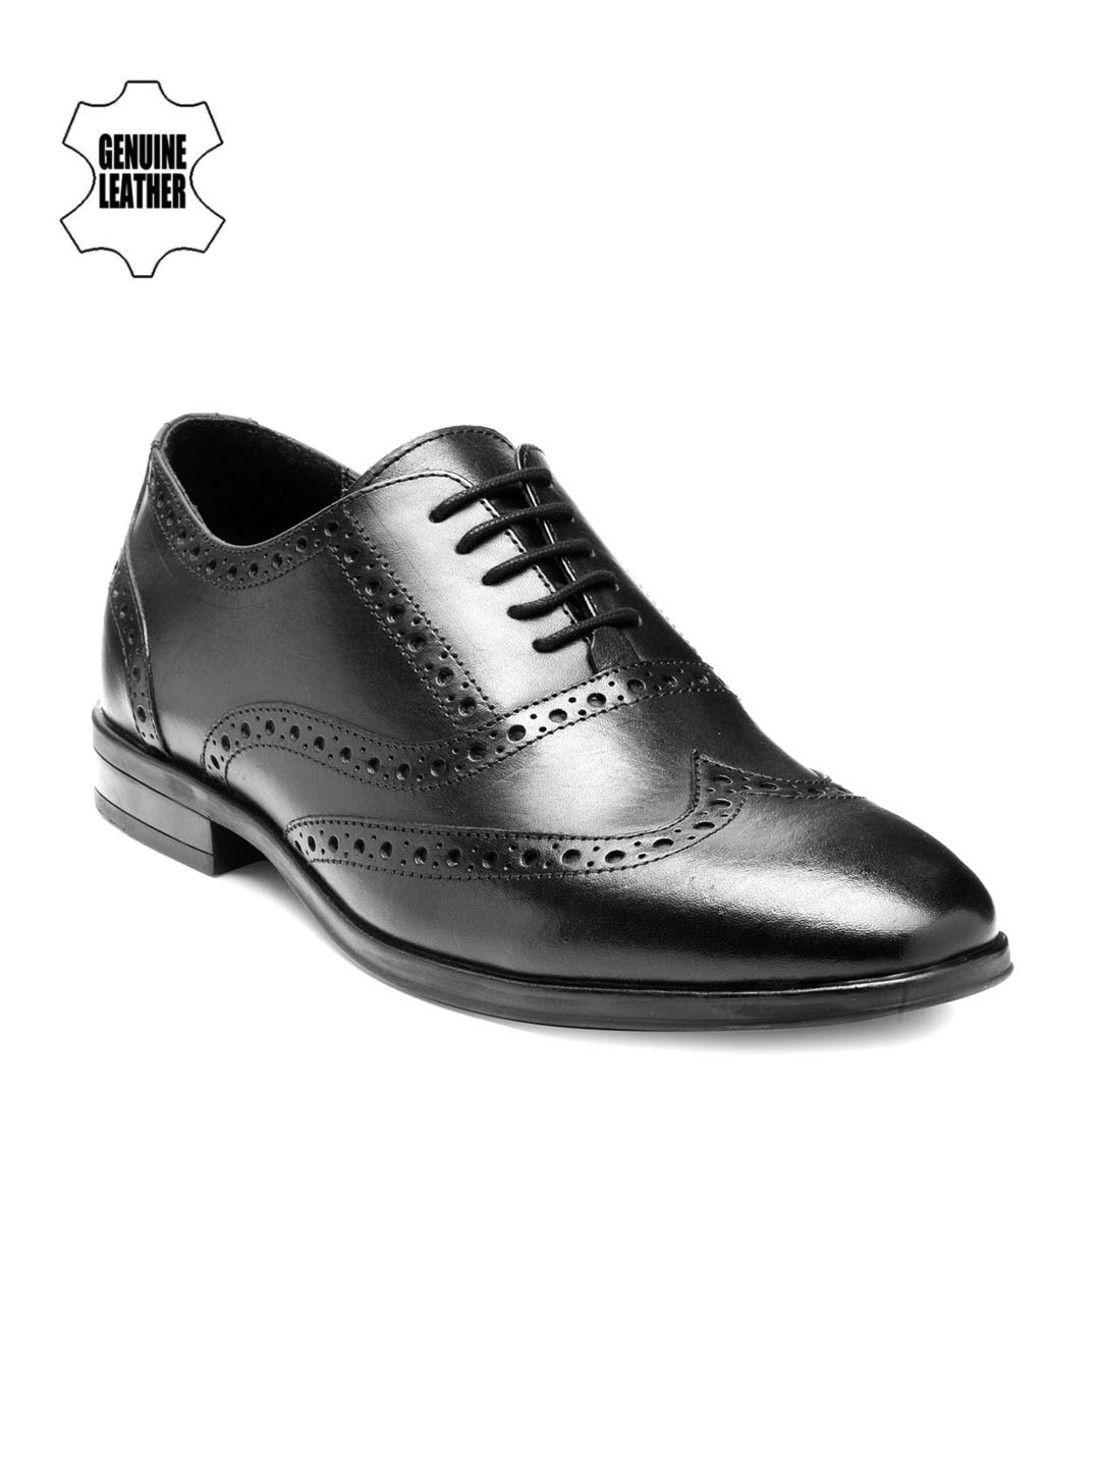 teakwood leathers men black leather formal shoes